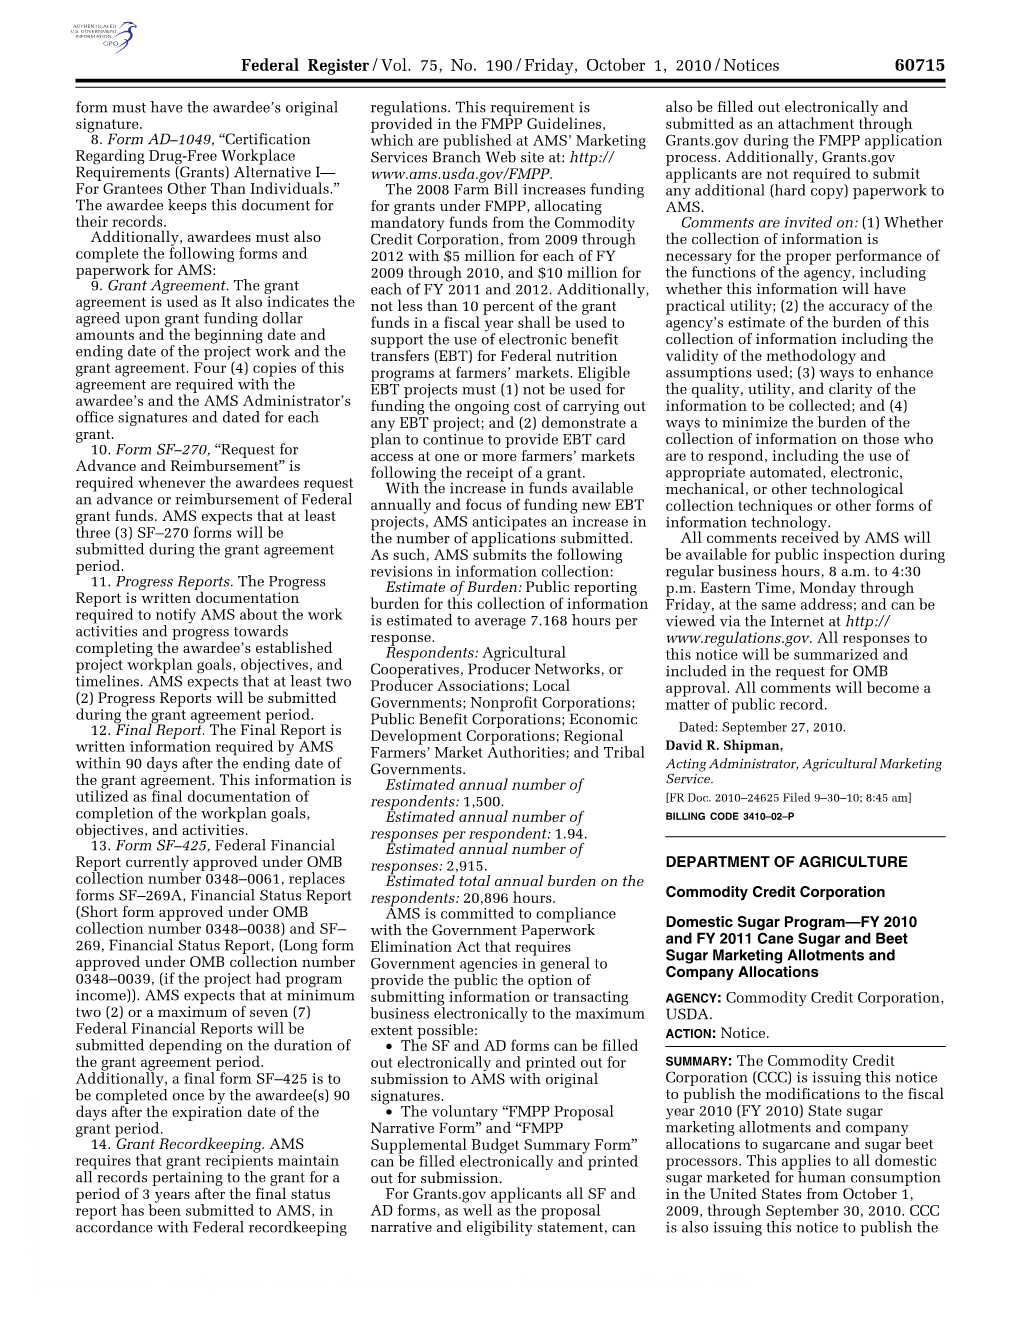 Federal Register/Vol. 75, No. 190/Friday, October 1, 2010/Notices